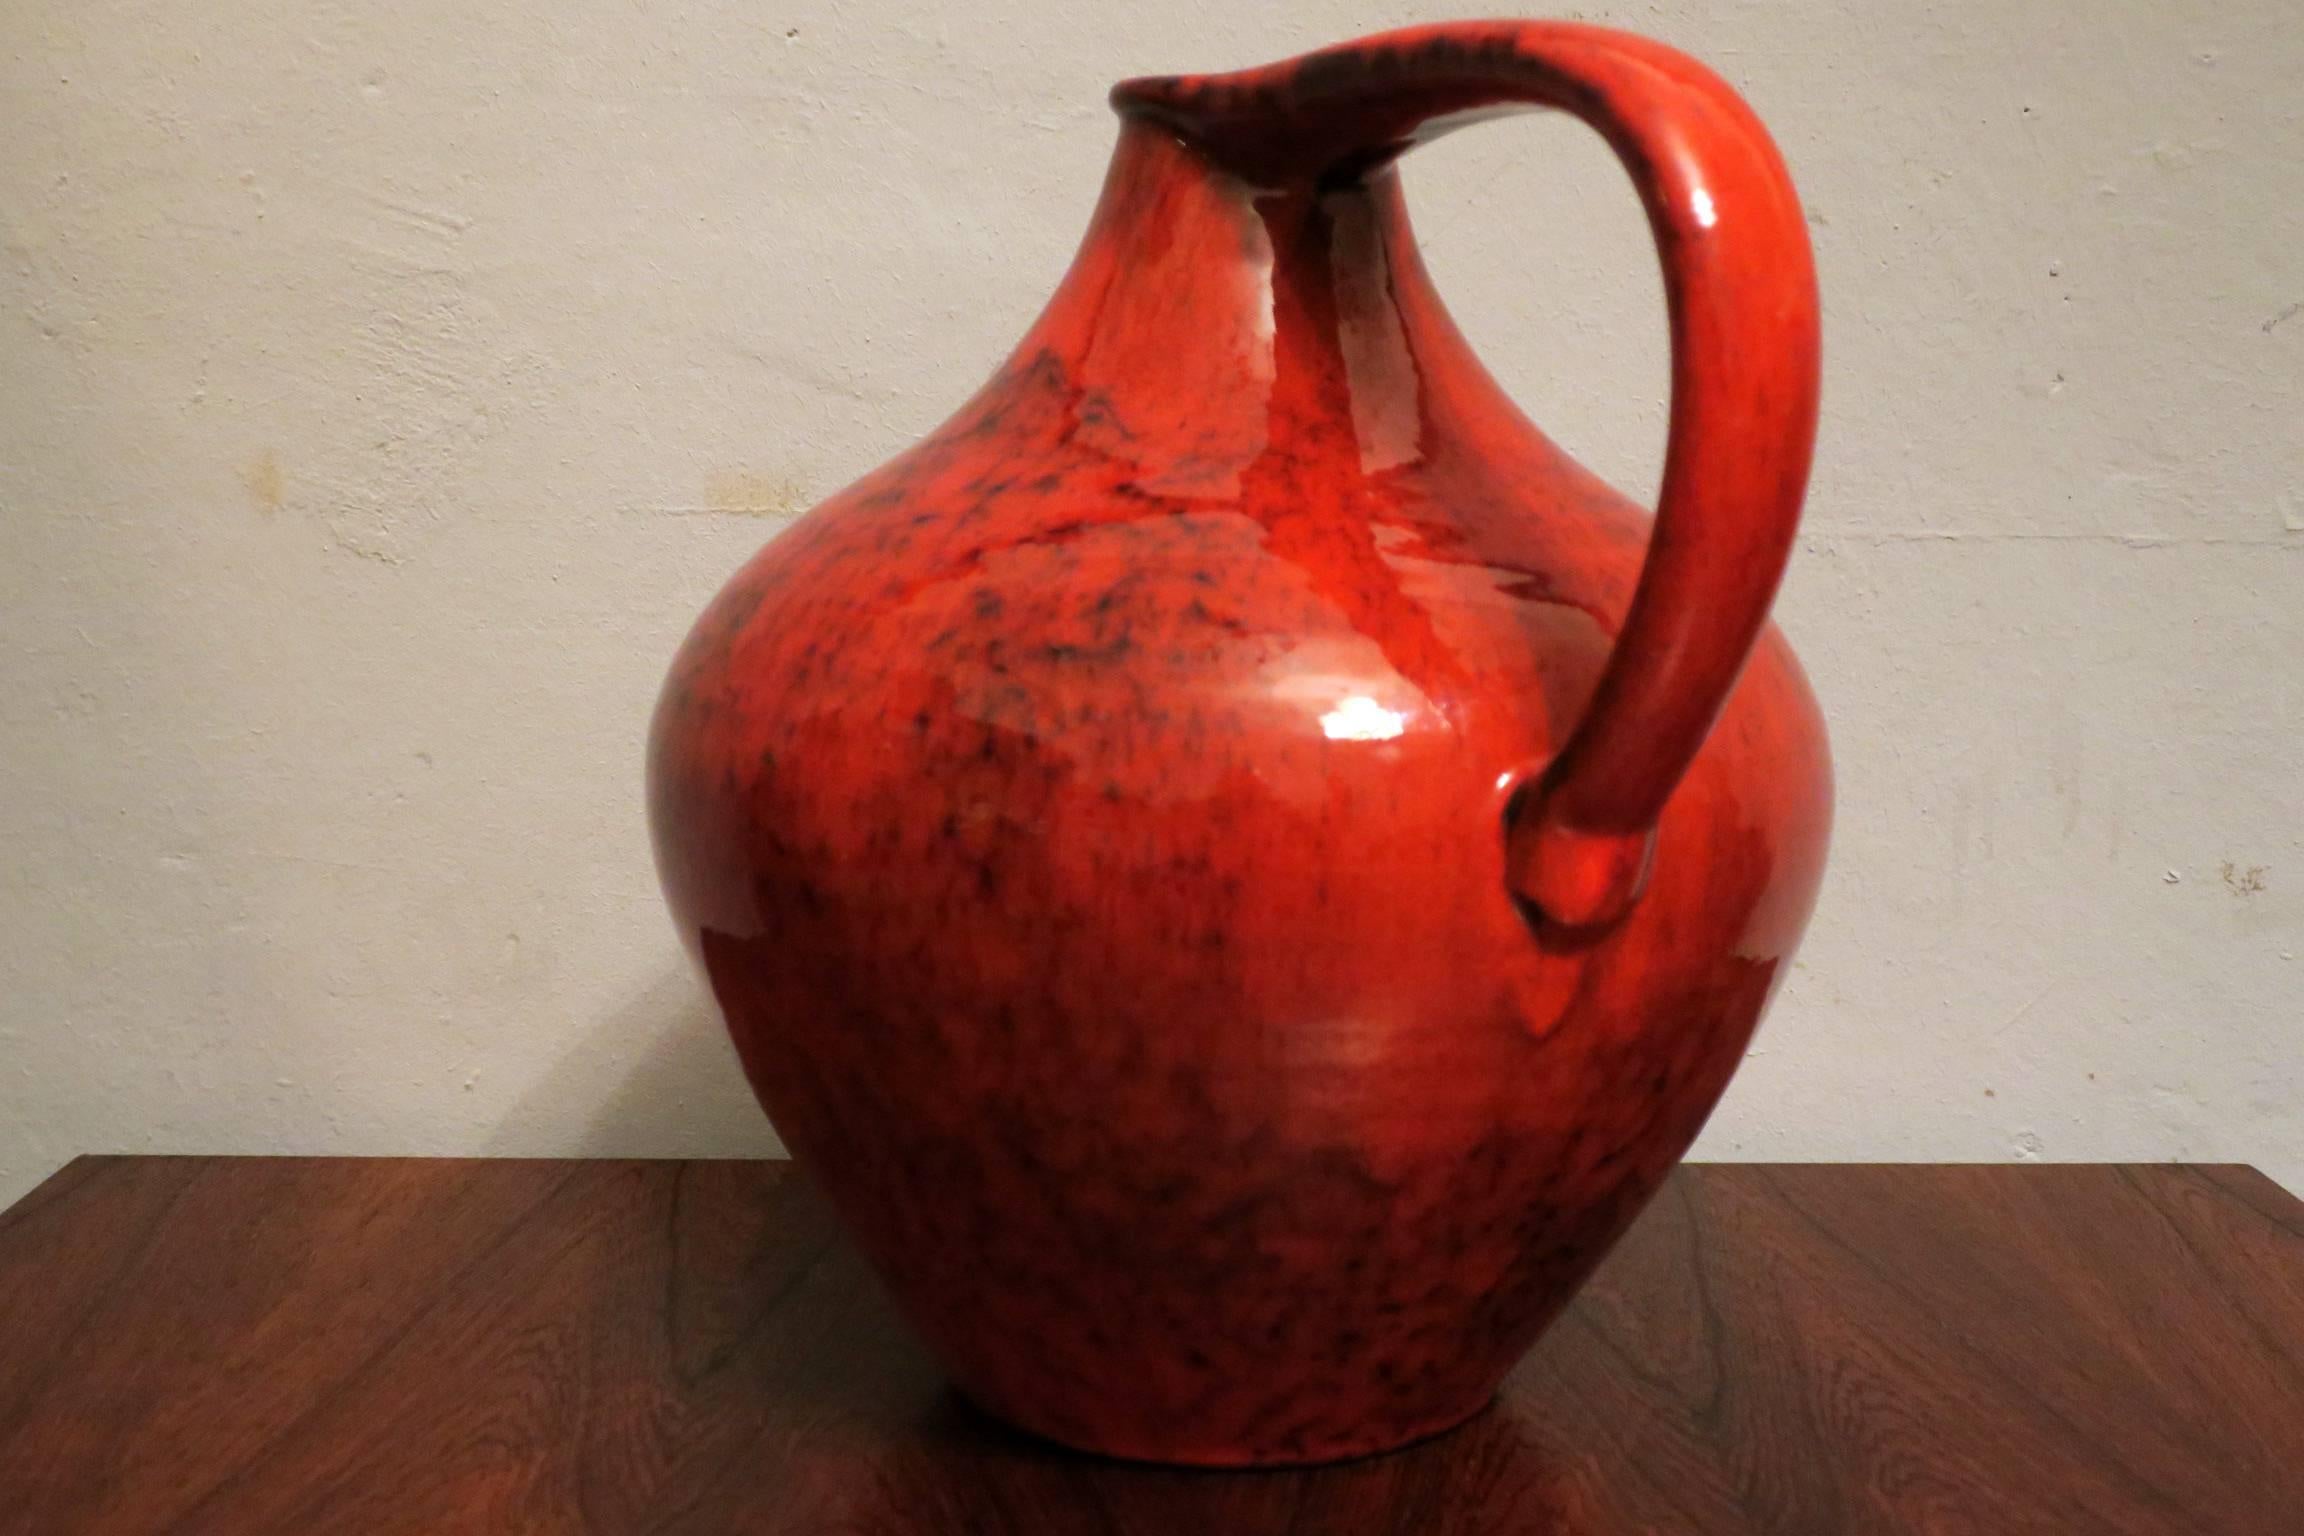 Striking West German glazed ceramic vase or pitcher from the 1950s.